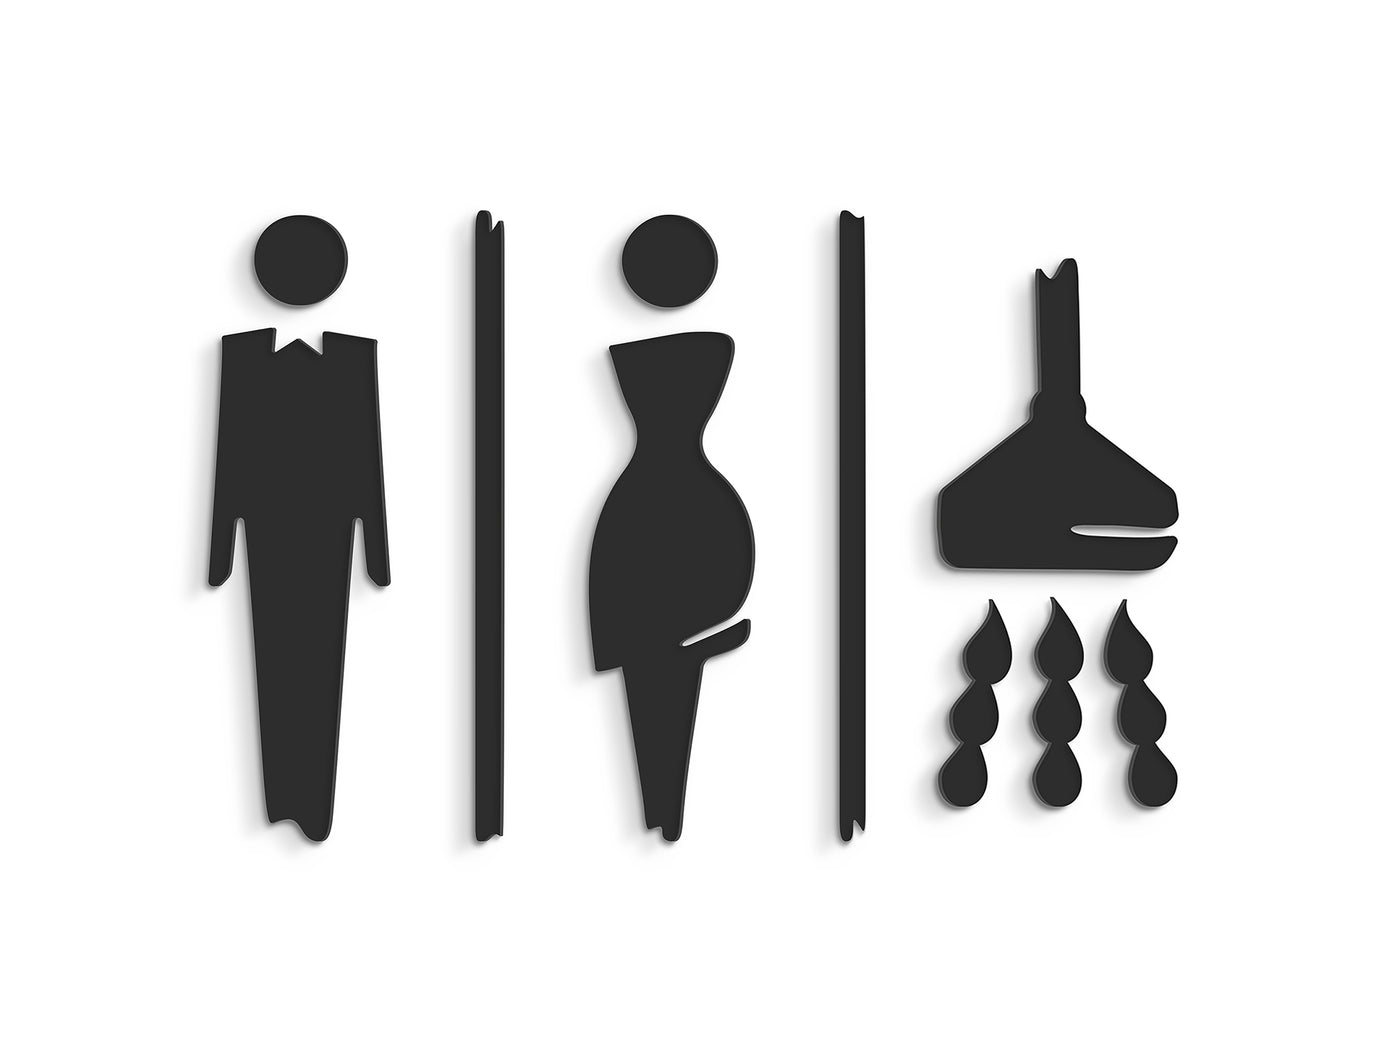 Elegant, Set 3x - Segnaletica bagni, Simboli adesivi toilette in rilievo -  Man, Woman, Shower restroom